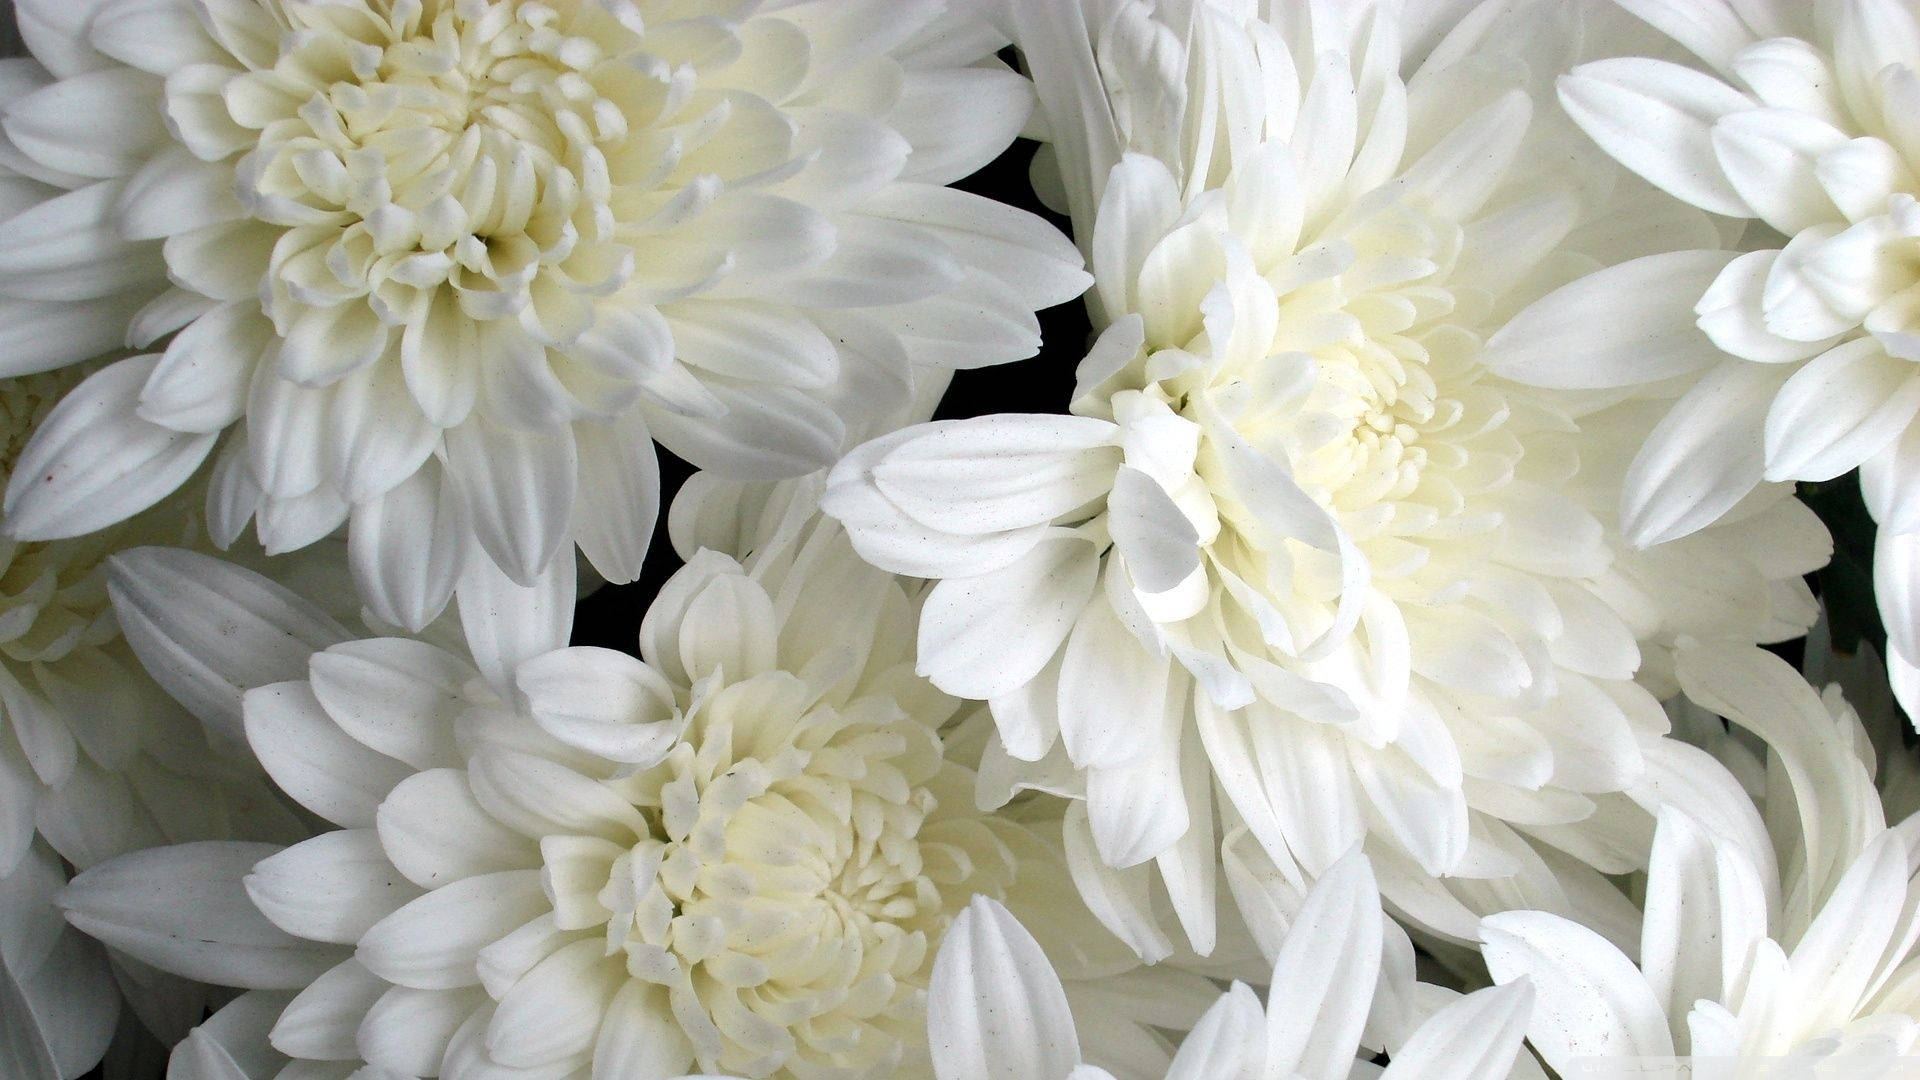 Chrysanthemum White Flowers Close-Up Wallpaper